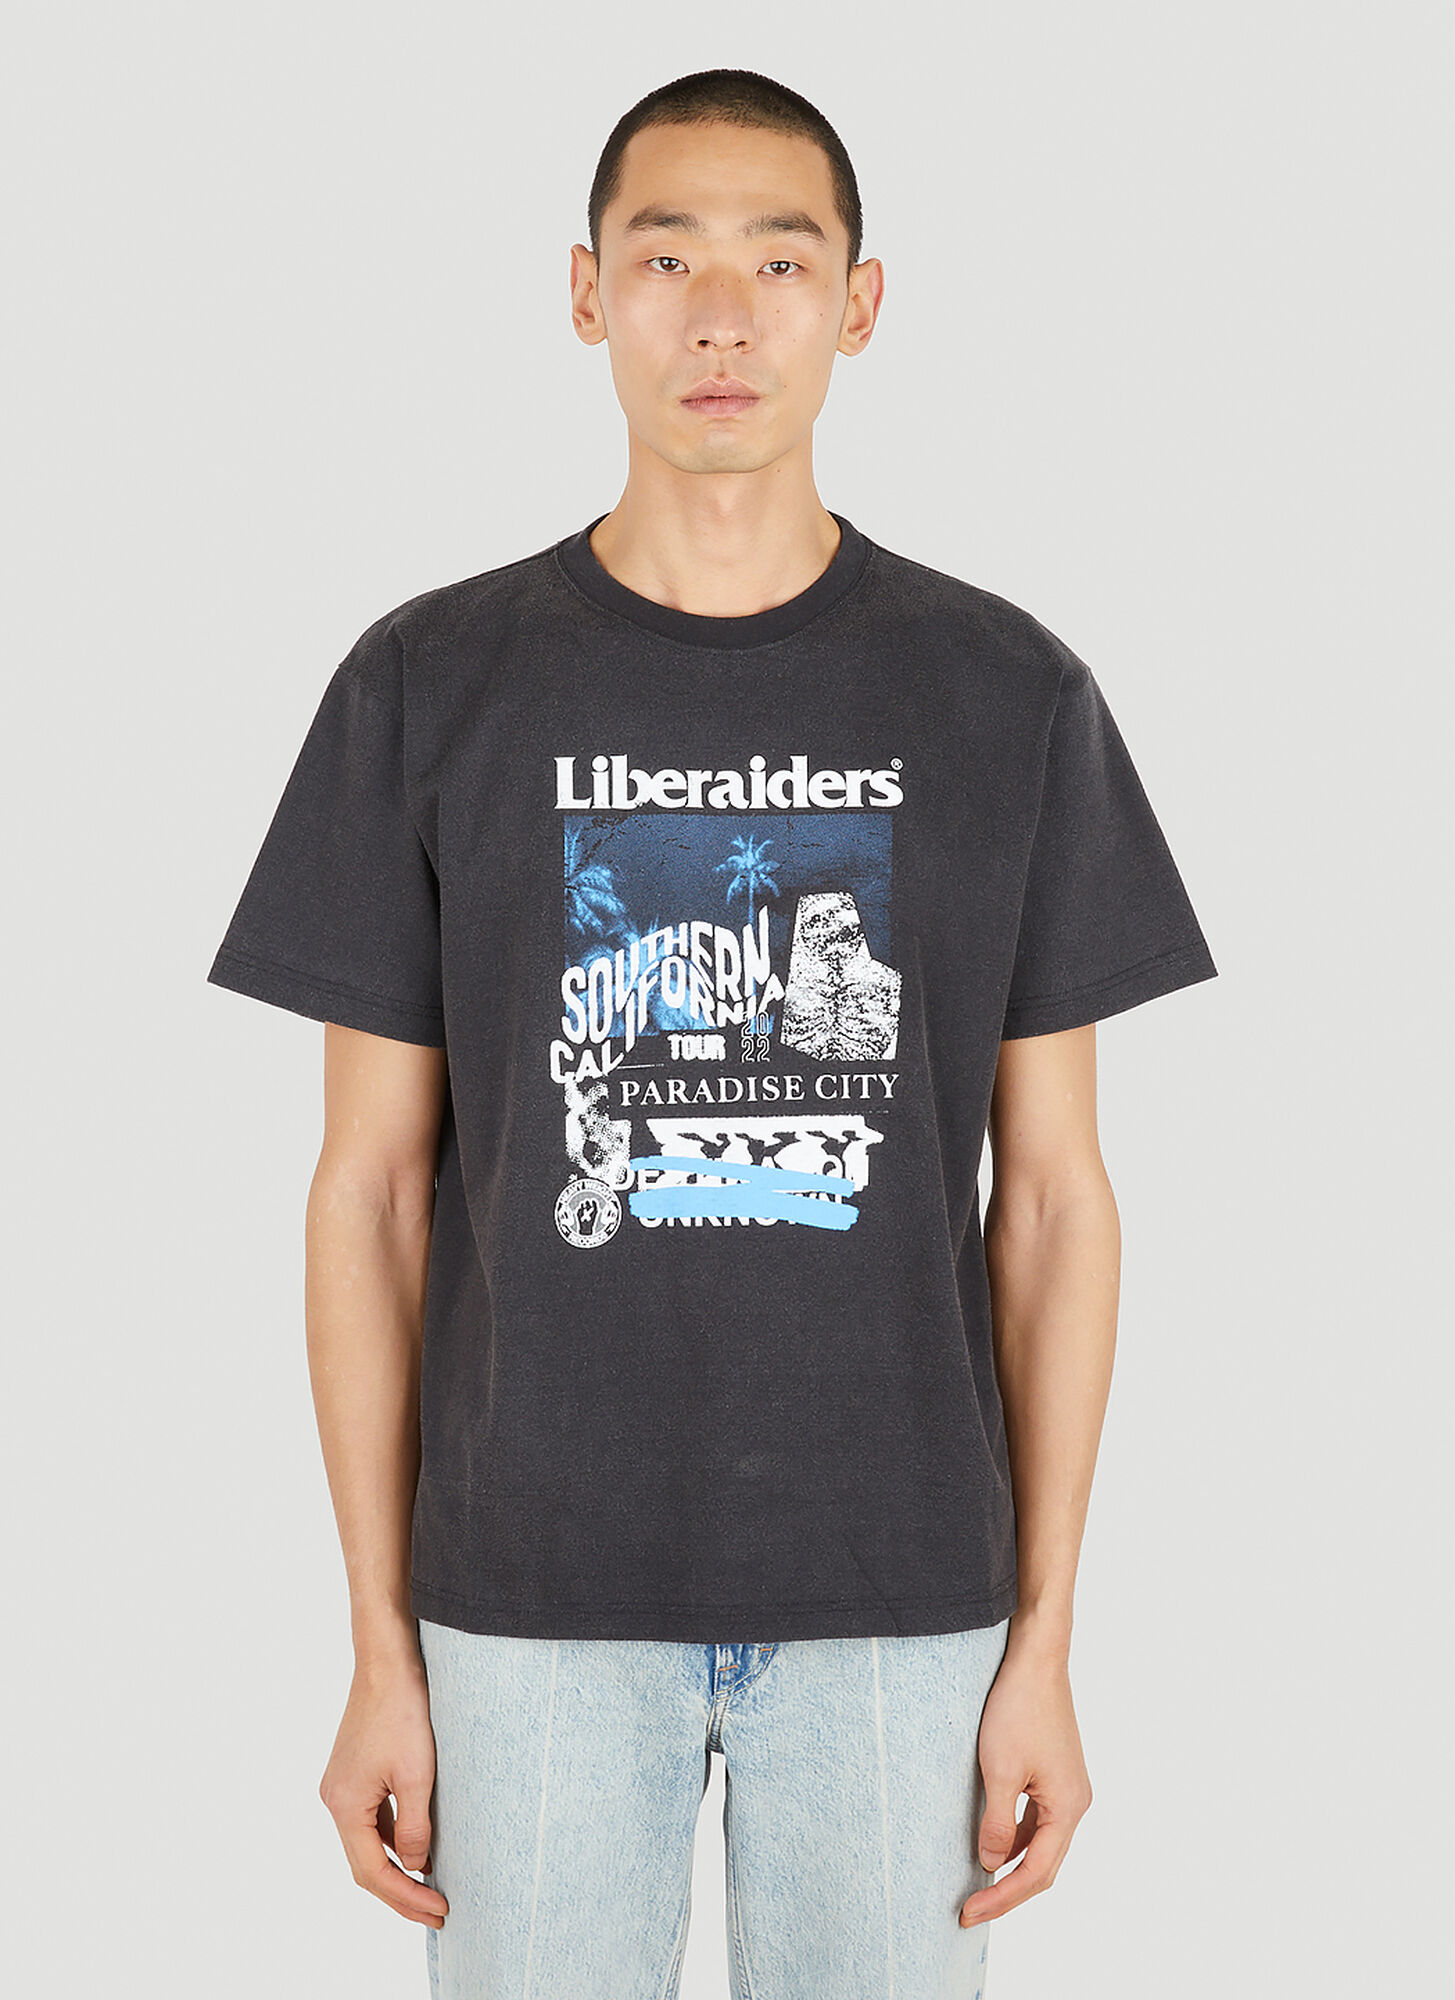 Liberaiders So-cal T-shirt Male Black